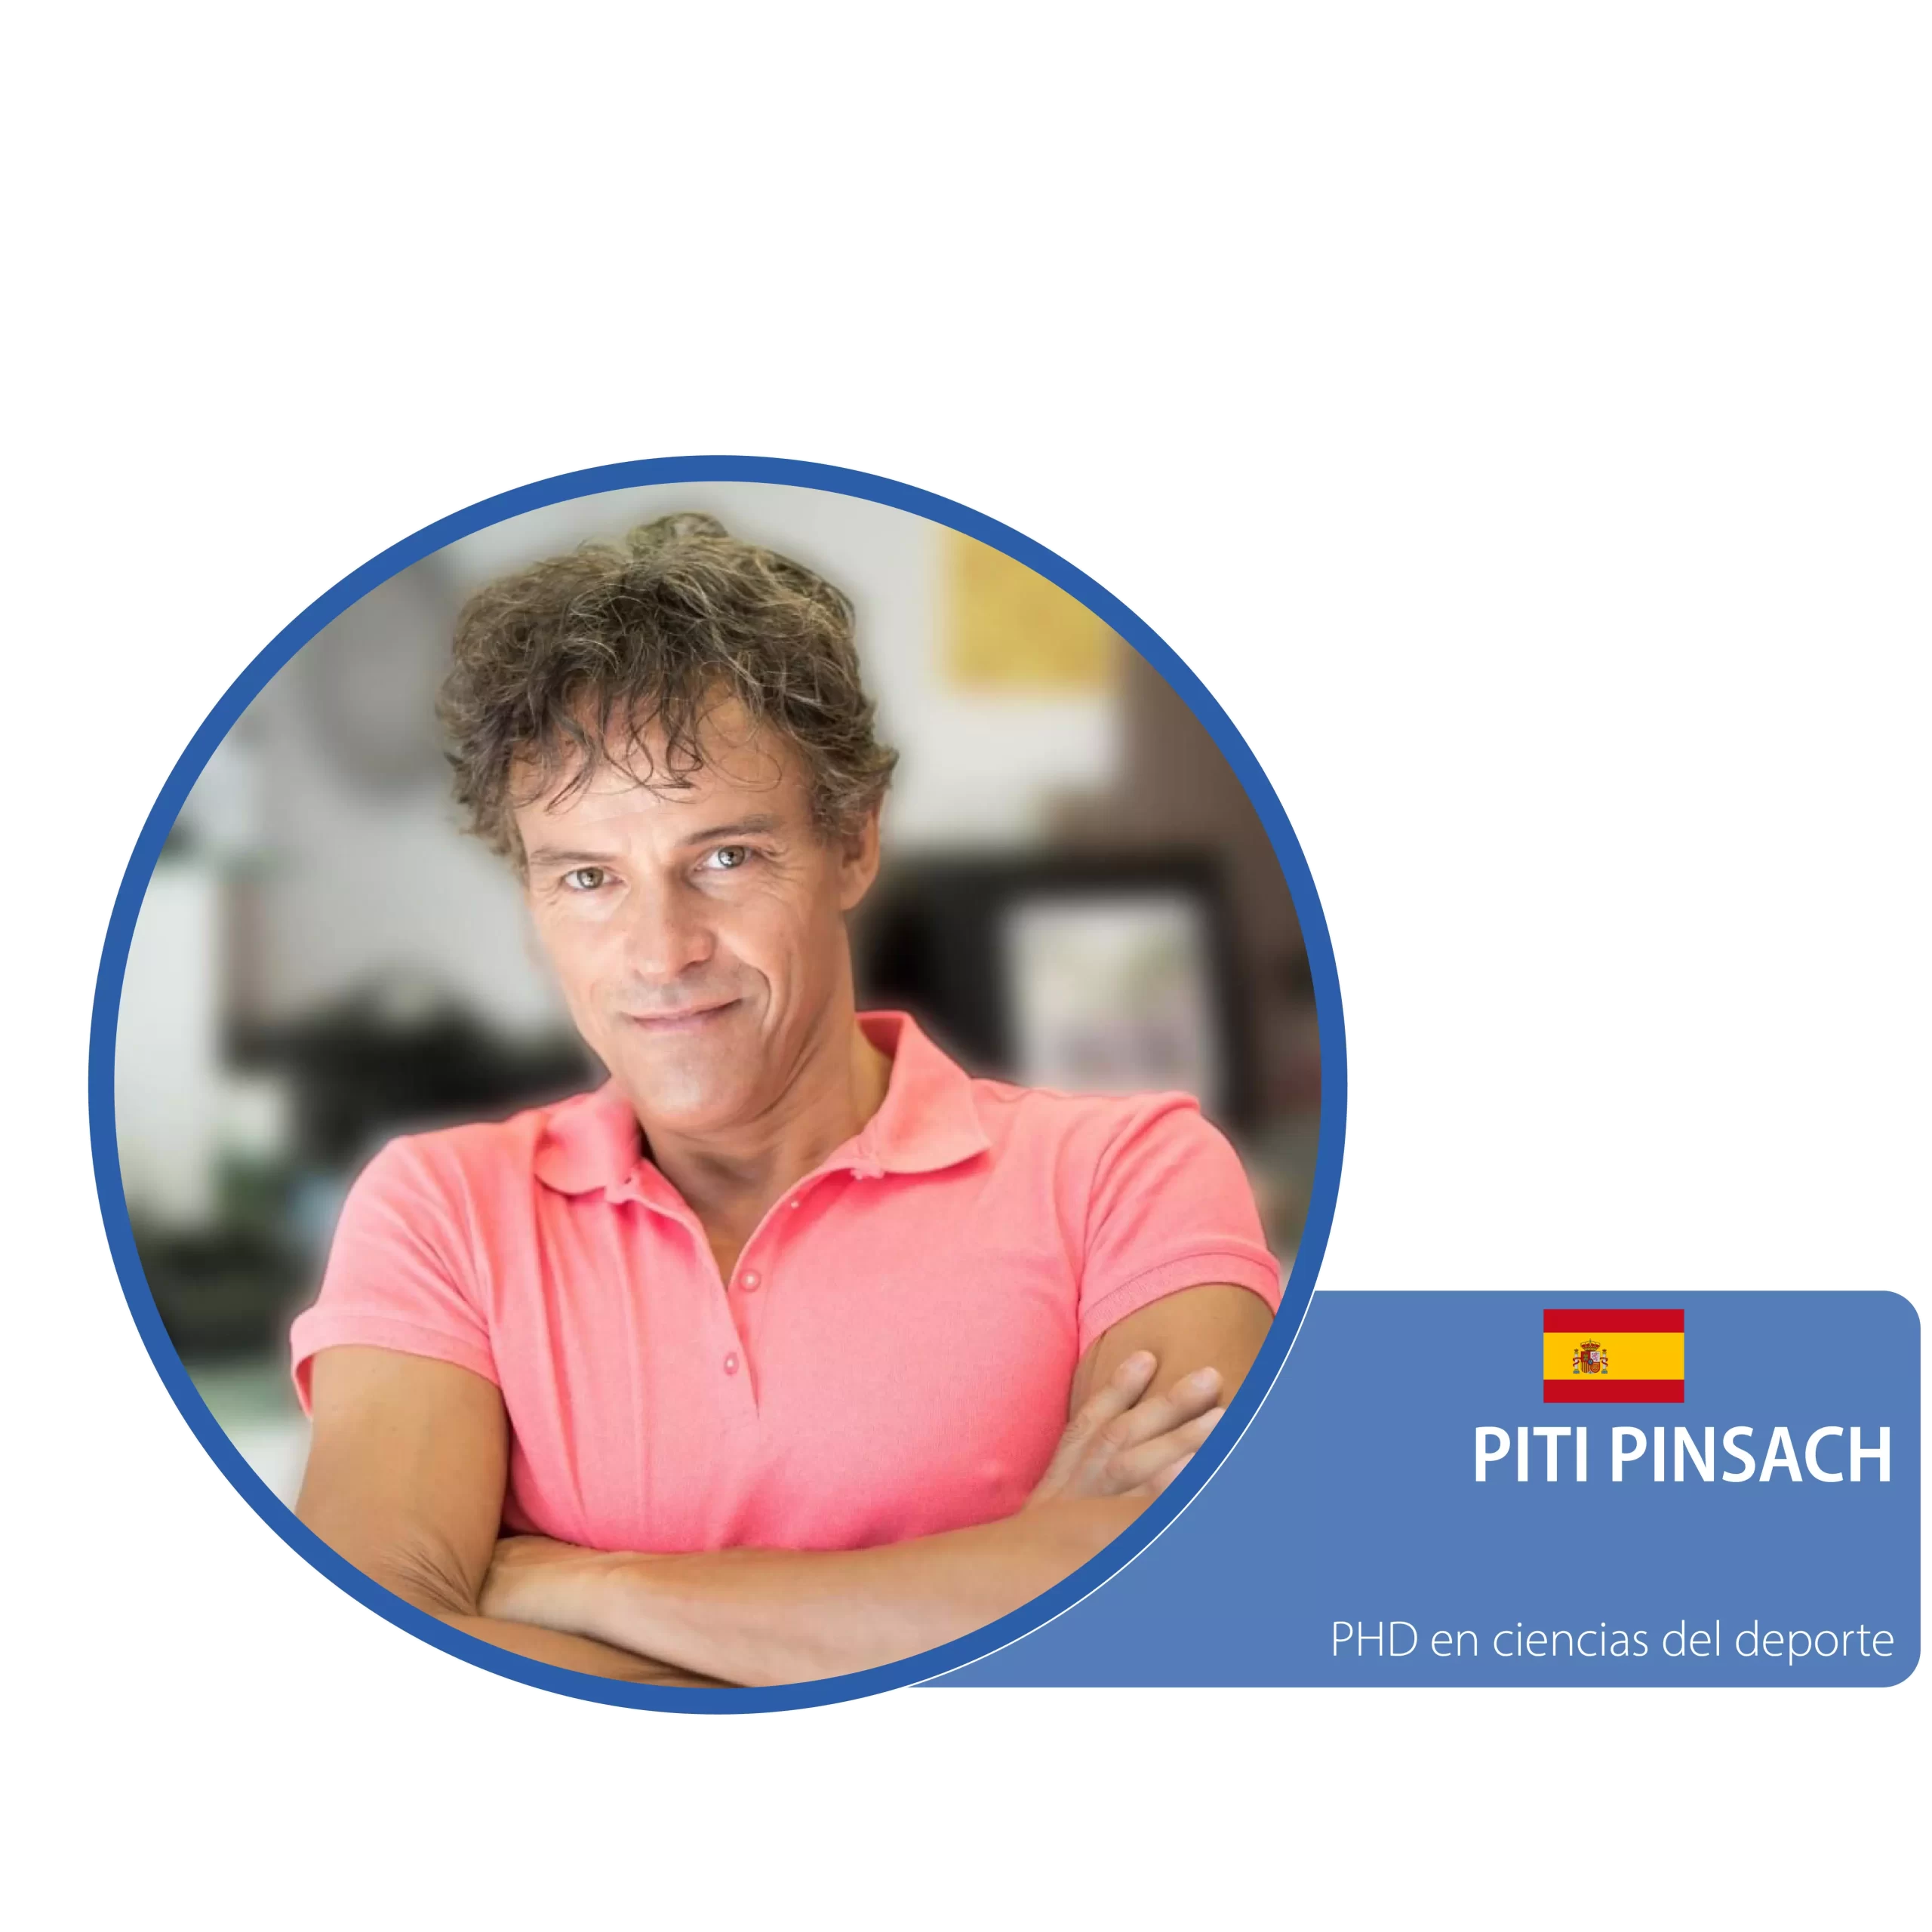 Piti Pinsach